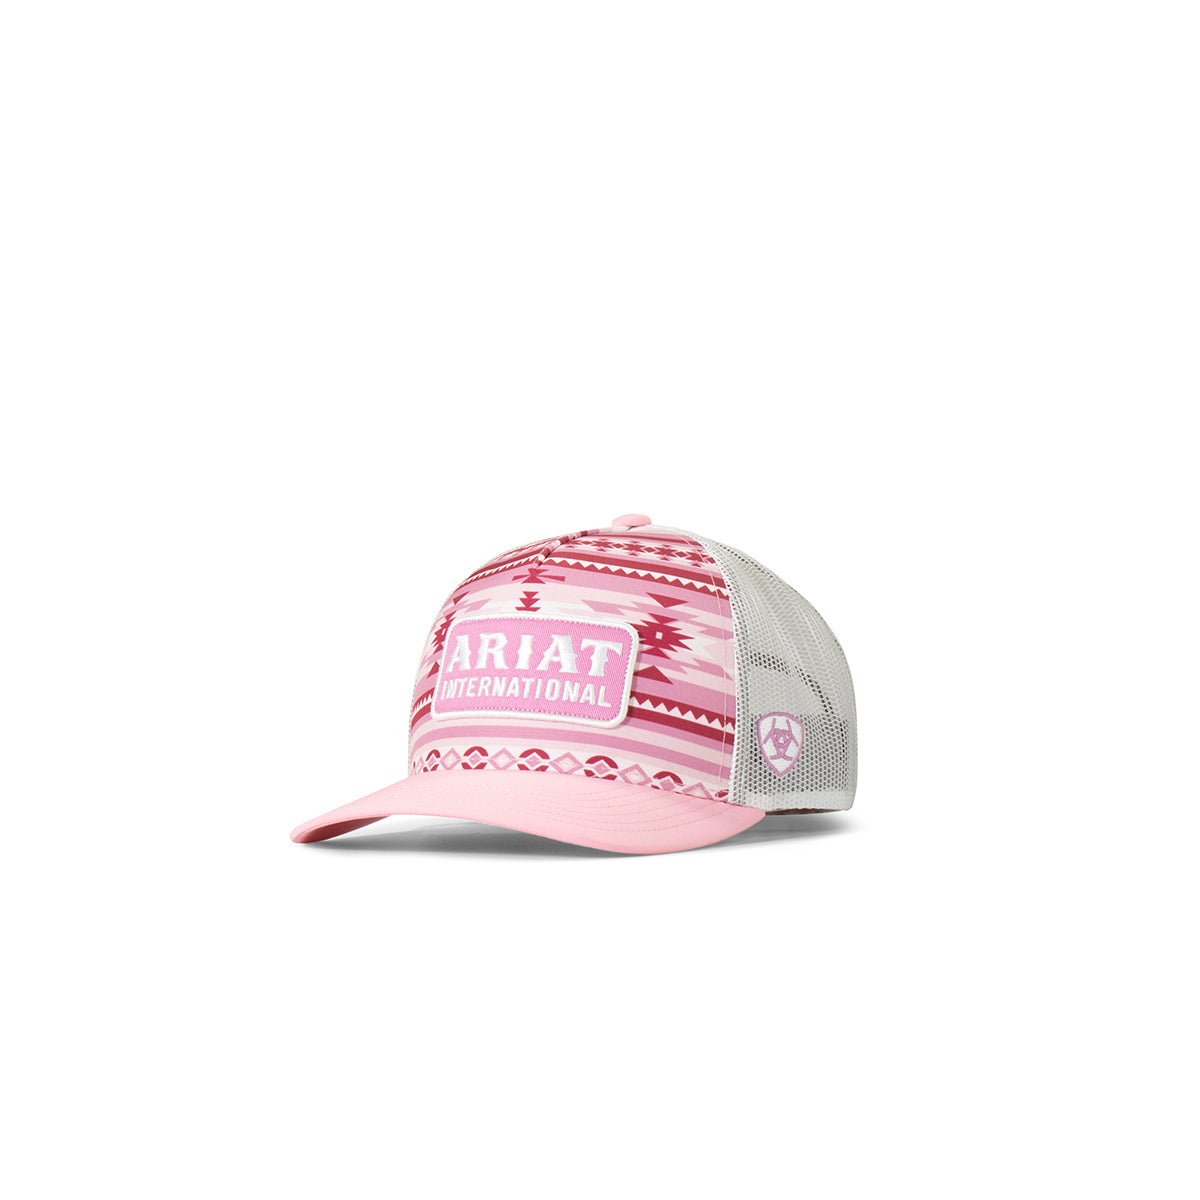 Ariat Women's Southwestern Snapback Cap - Pink